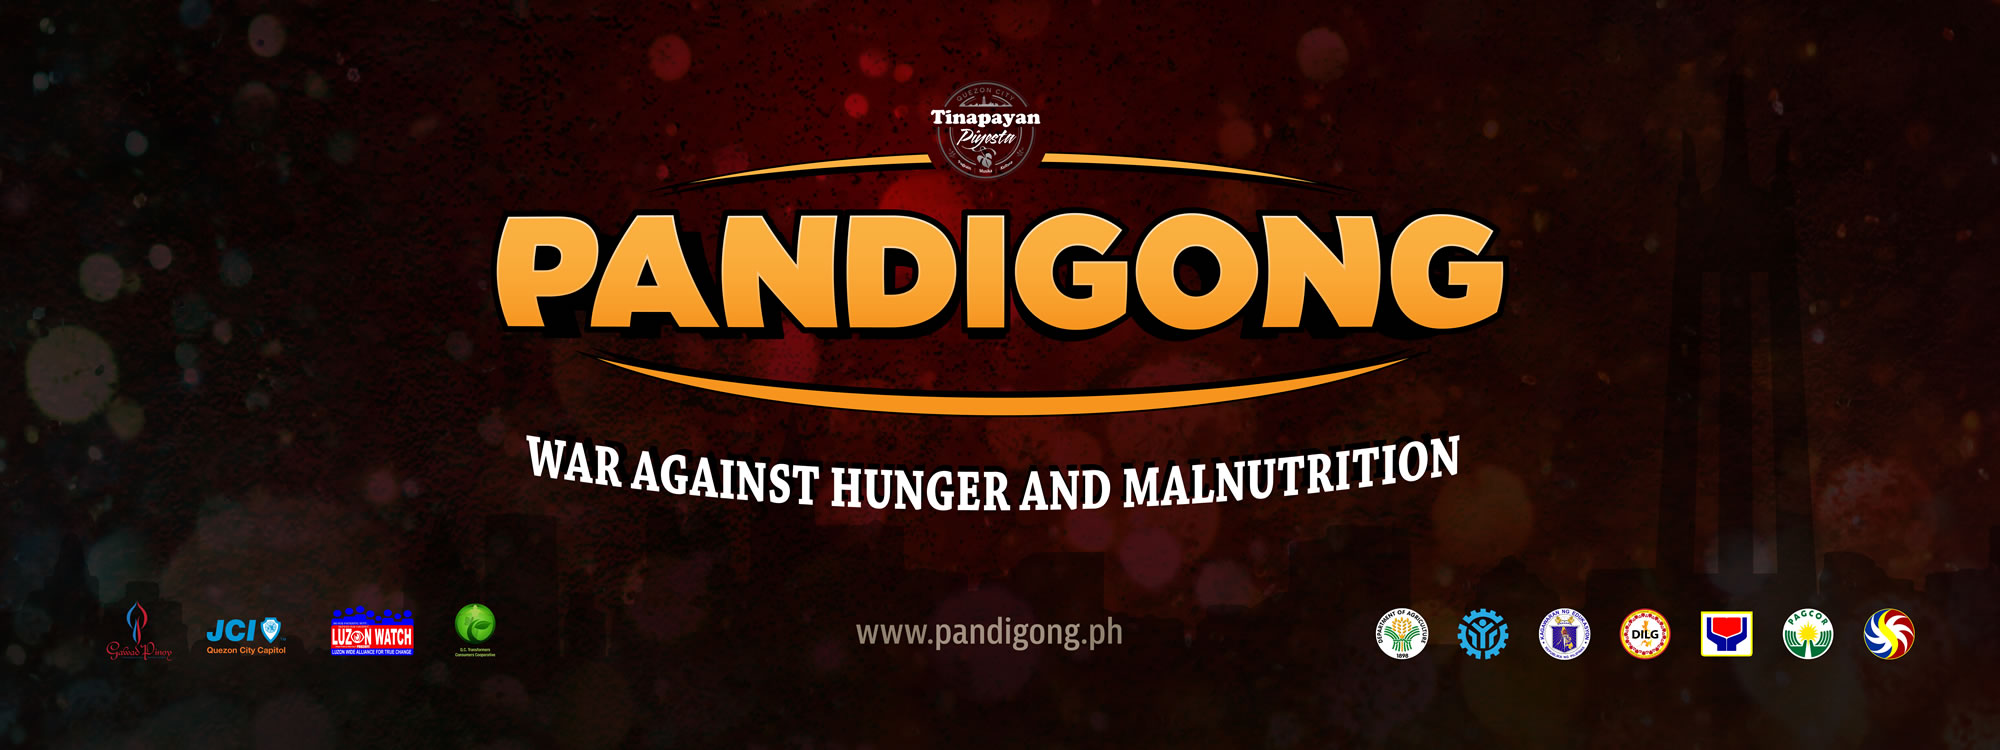 pandigong-banner-tarp-a-_lo